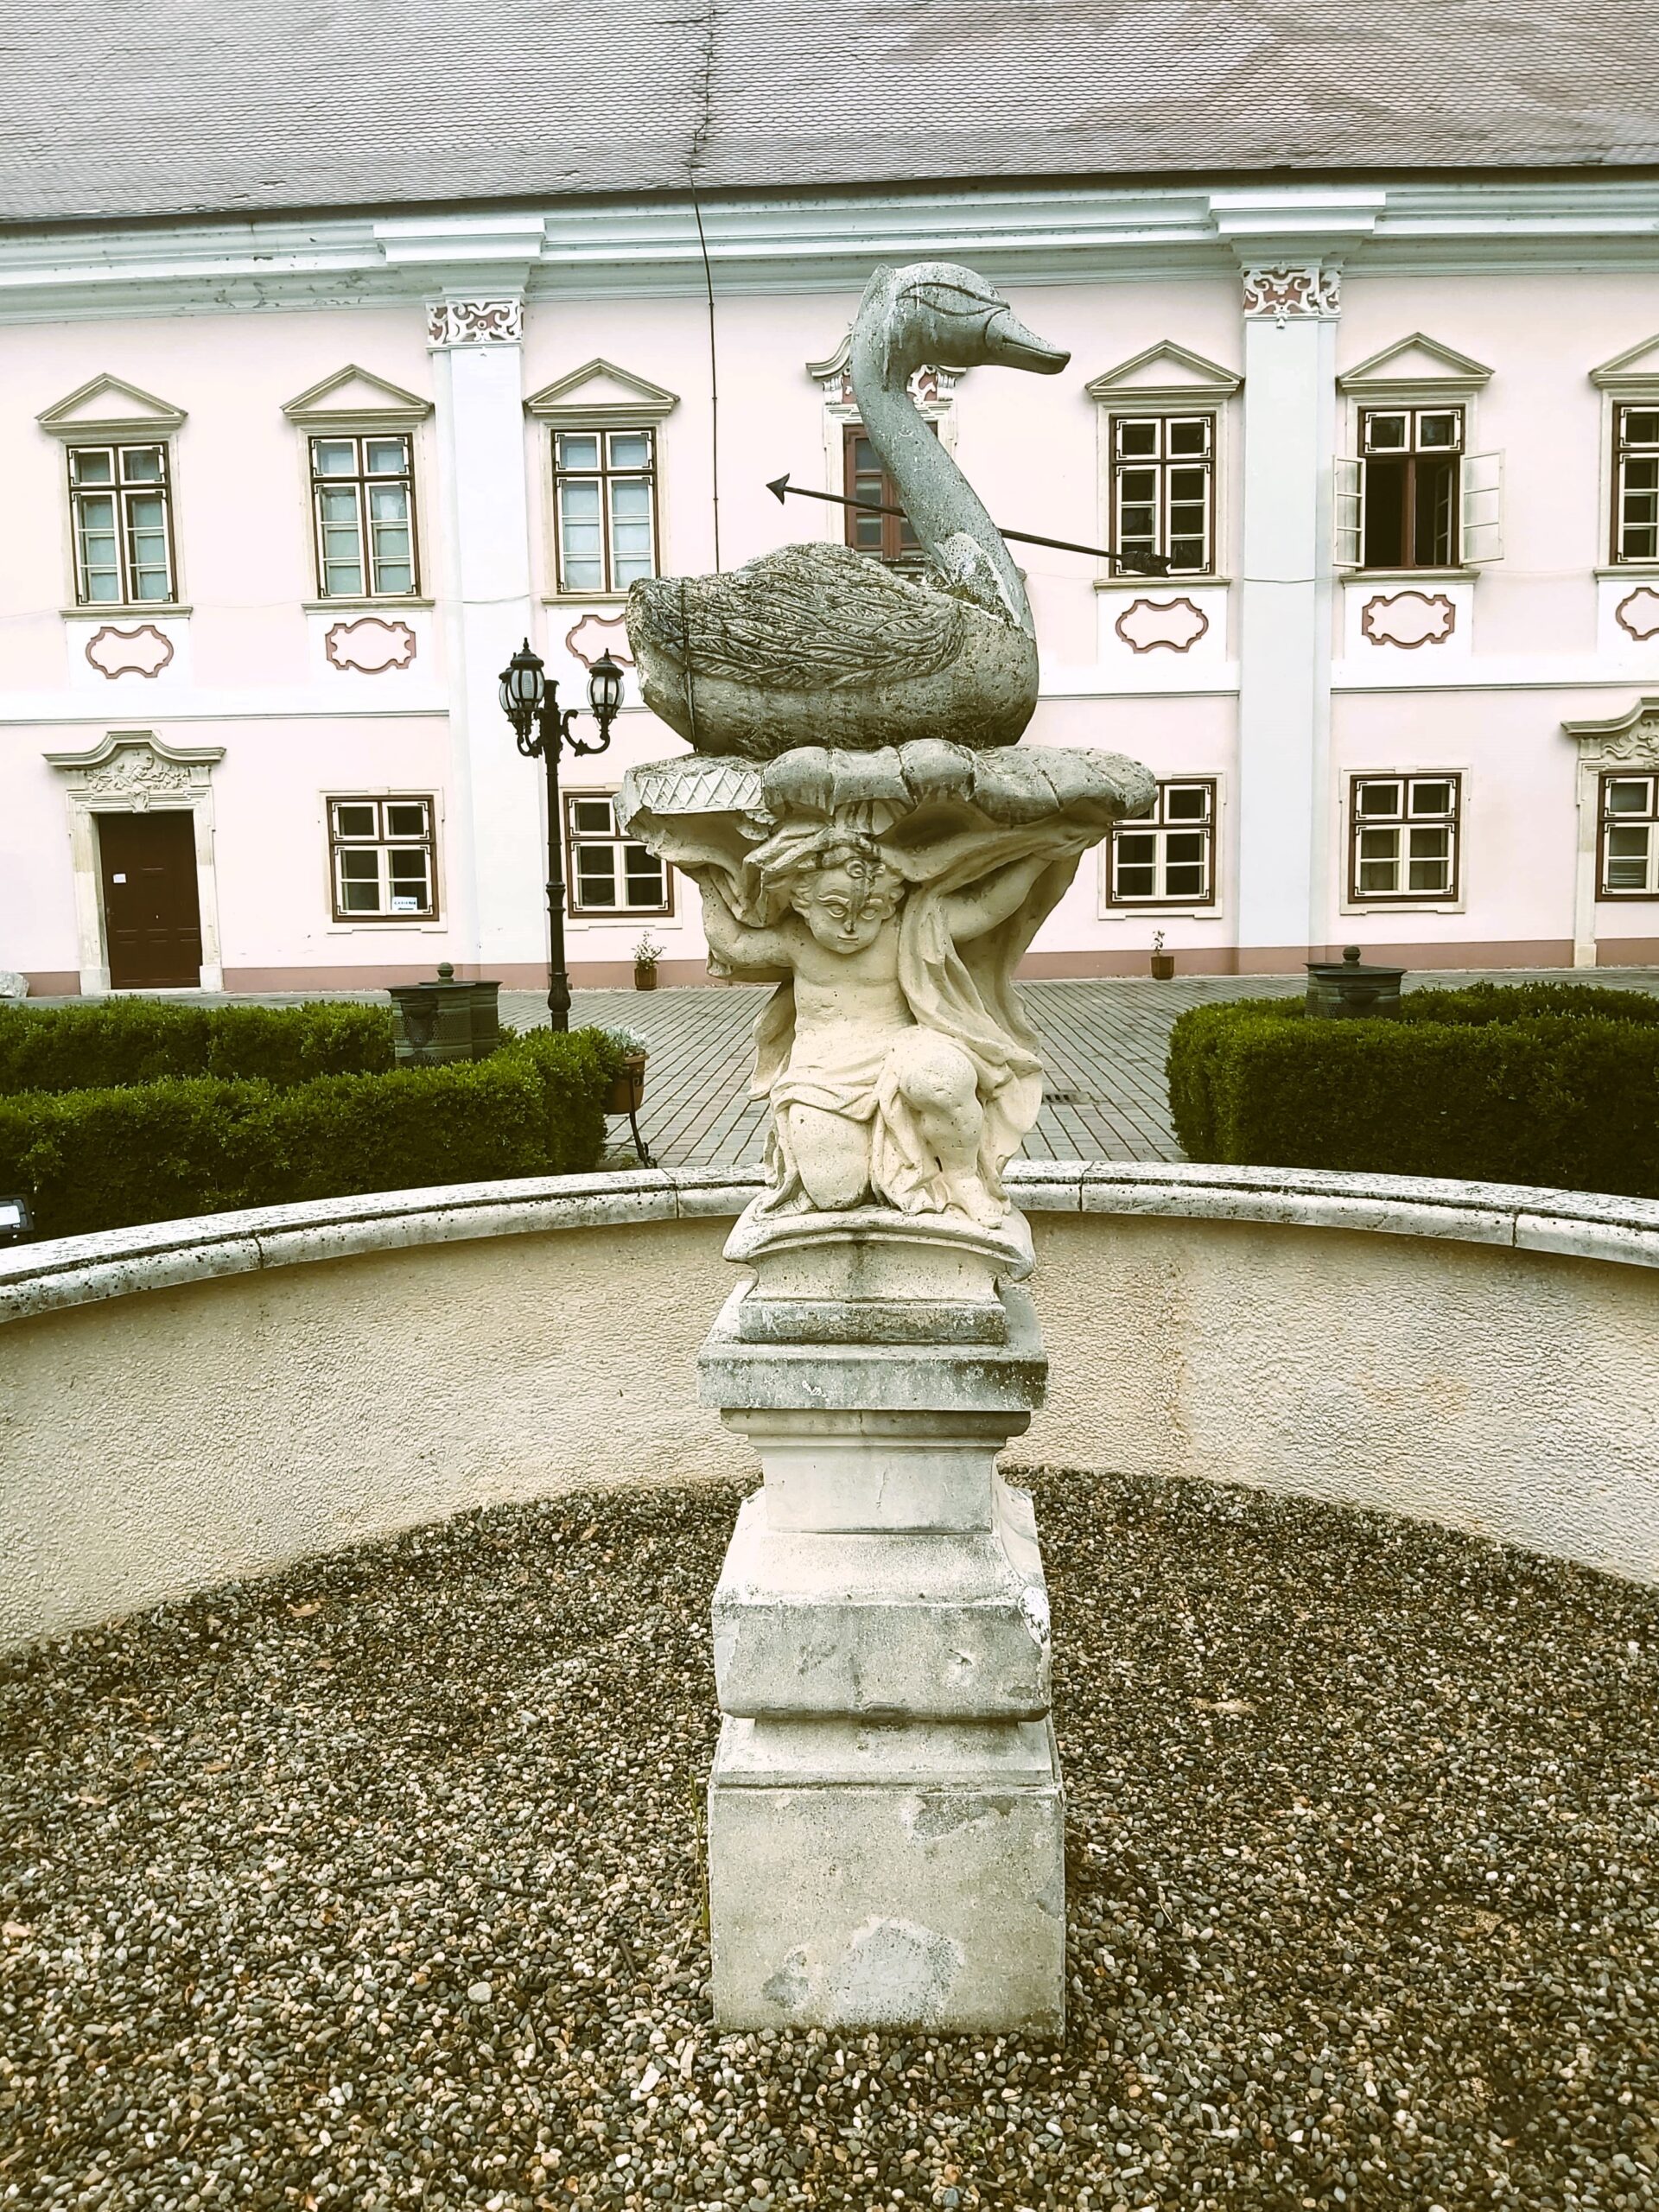 A carved fountain of a goose pierced with an arrow in Deva, Romania